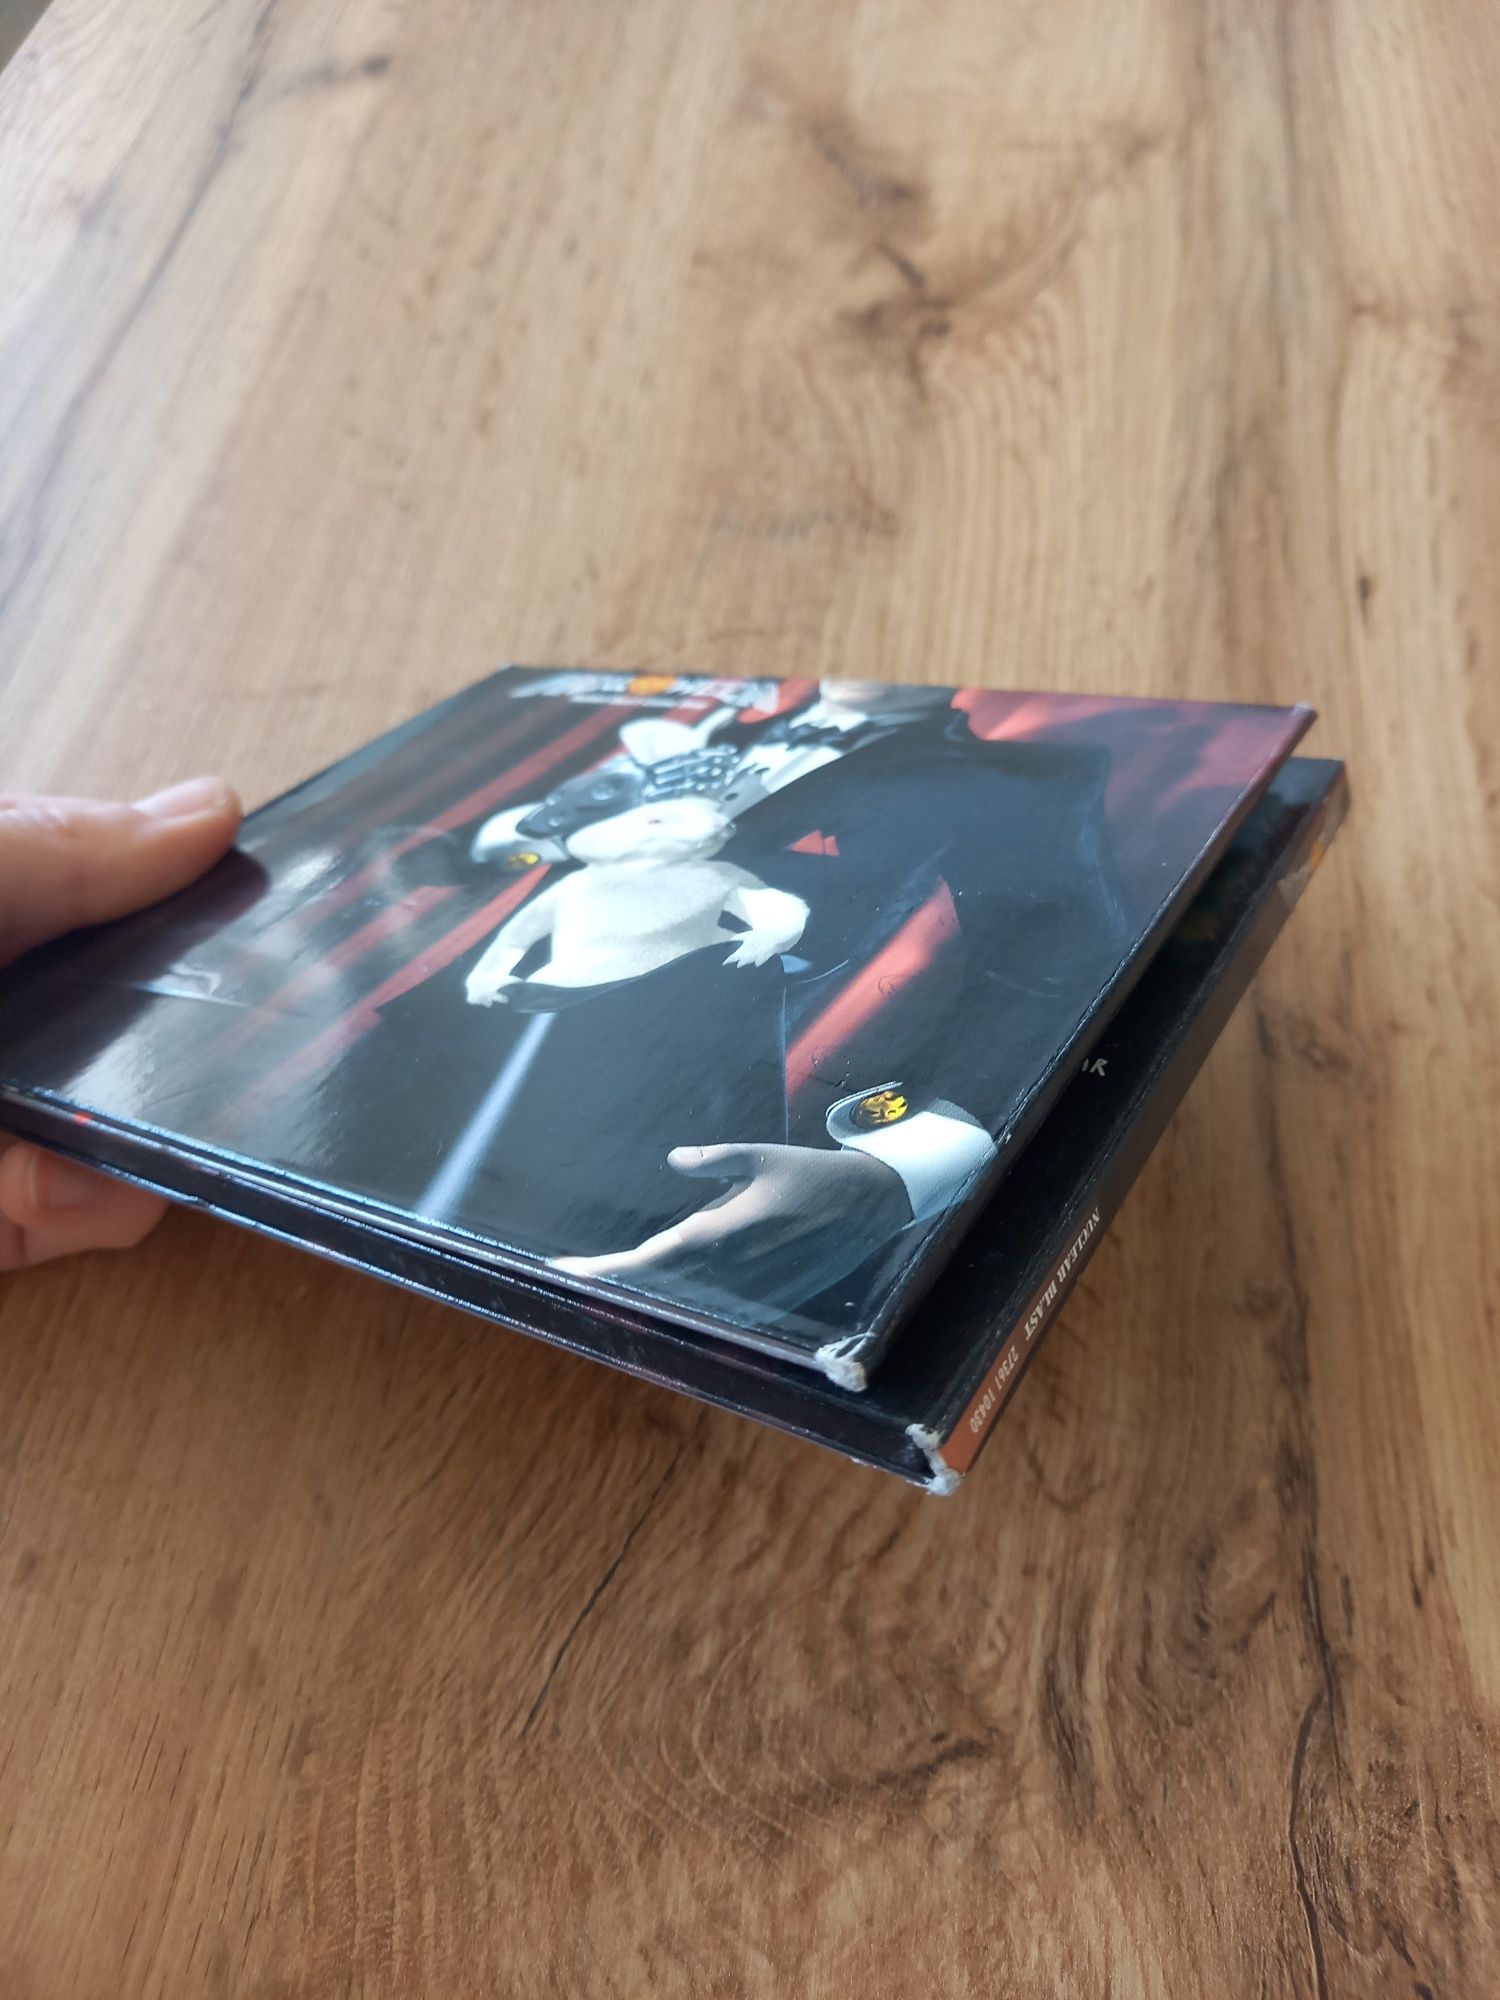 Płyta CD Helloween  - Rabbit don't come easy